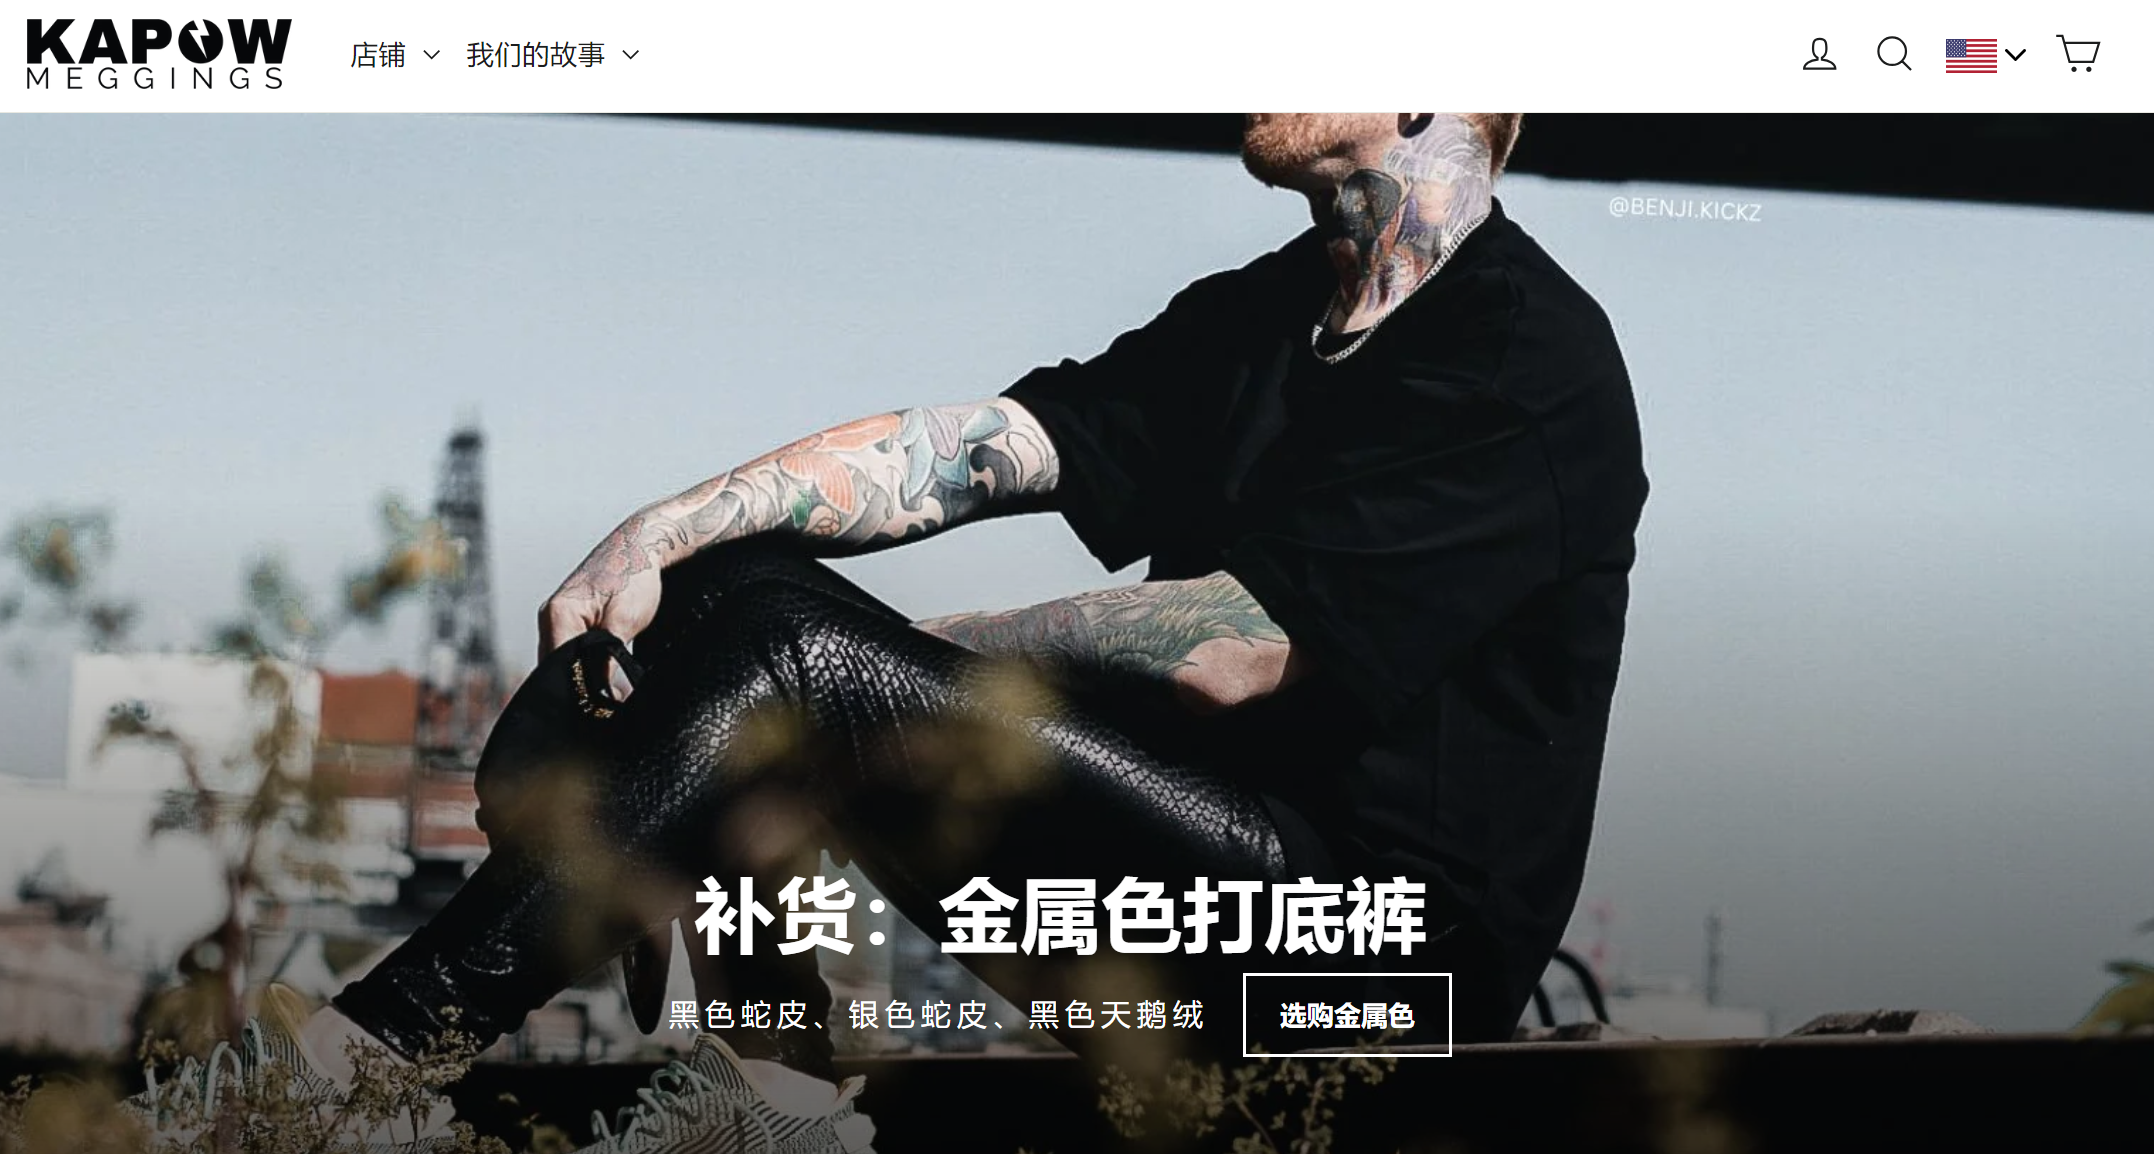 Kapow Meggings网站页面，一个纹身男人在水边